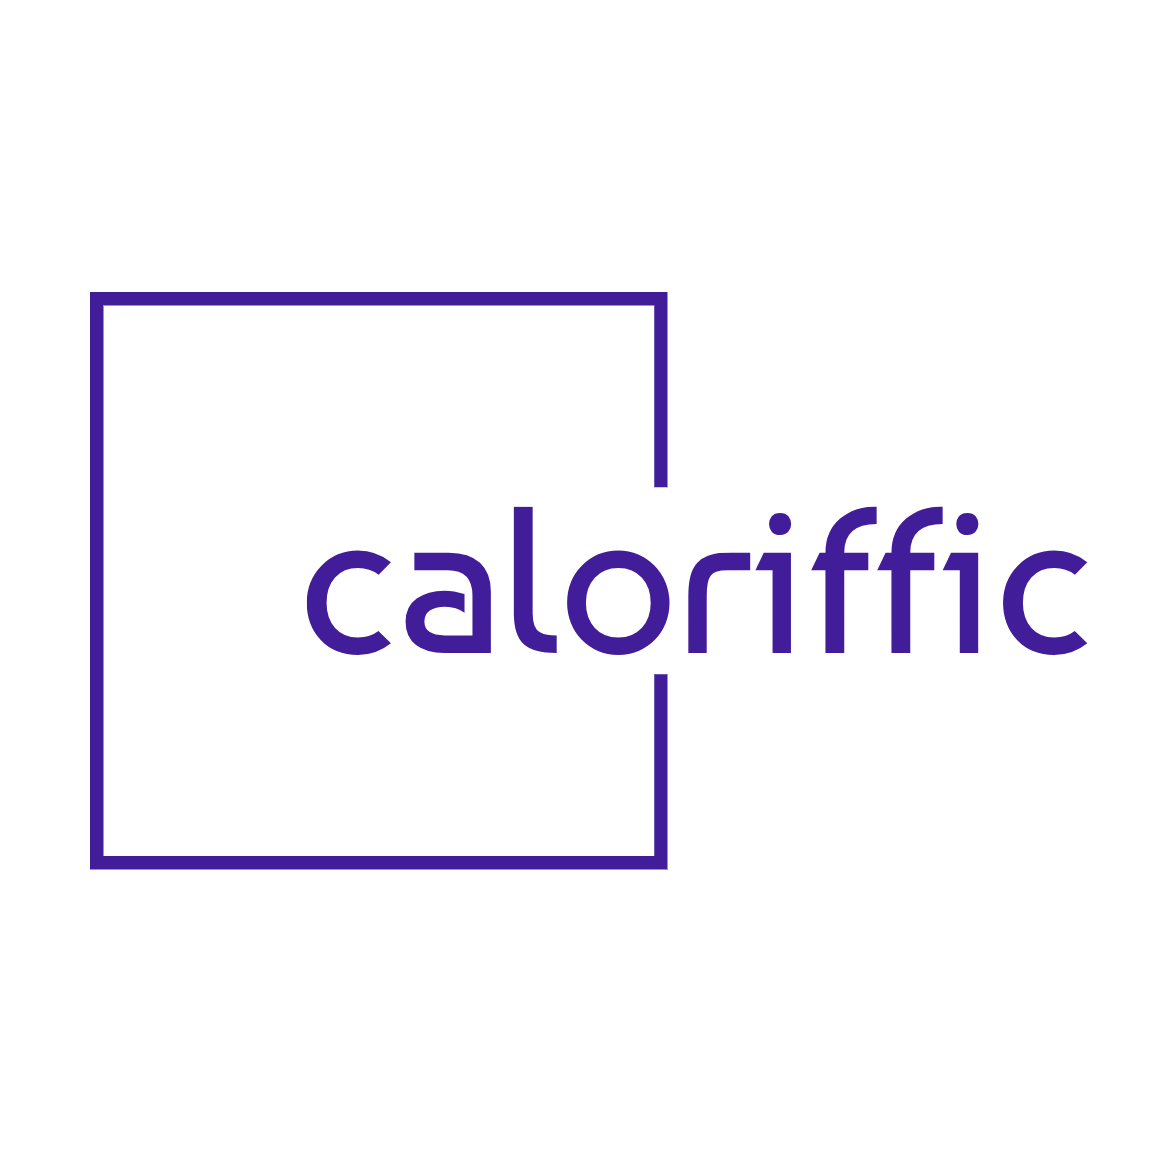 caloriffic logo